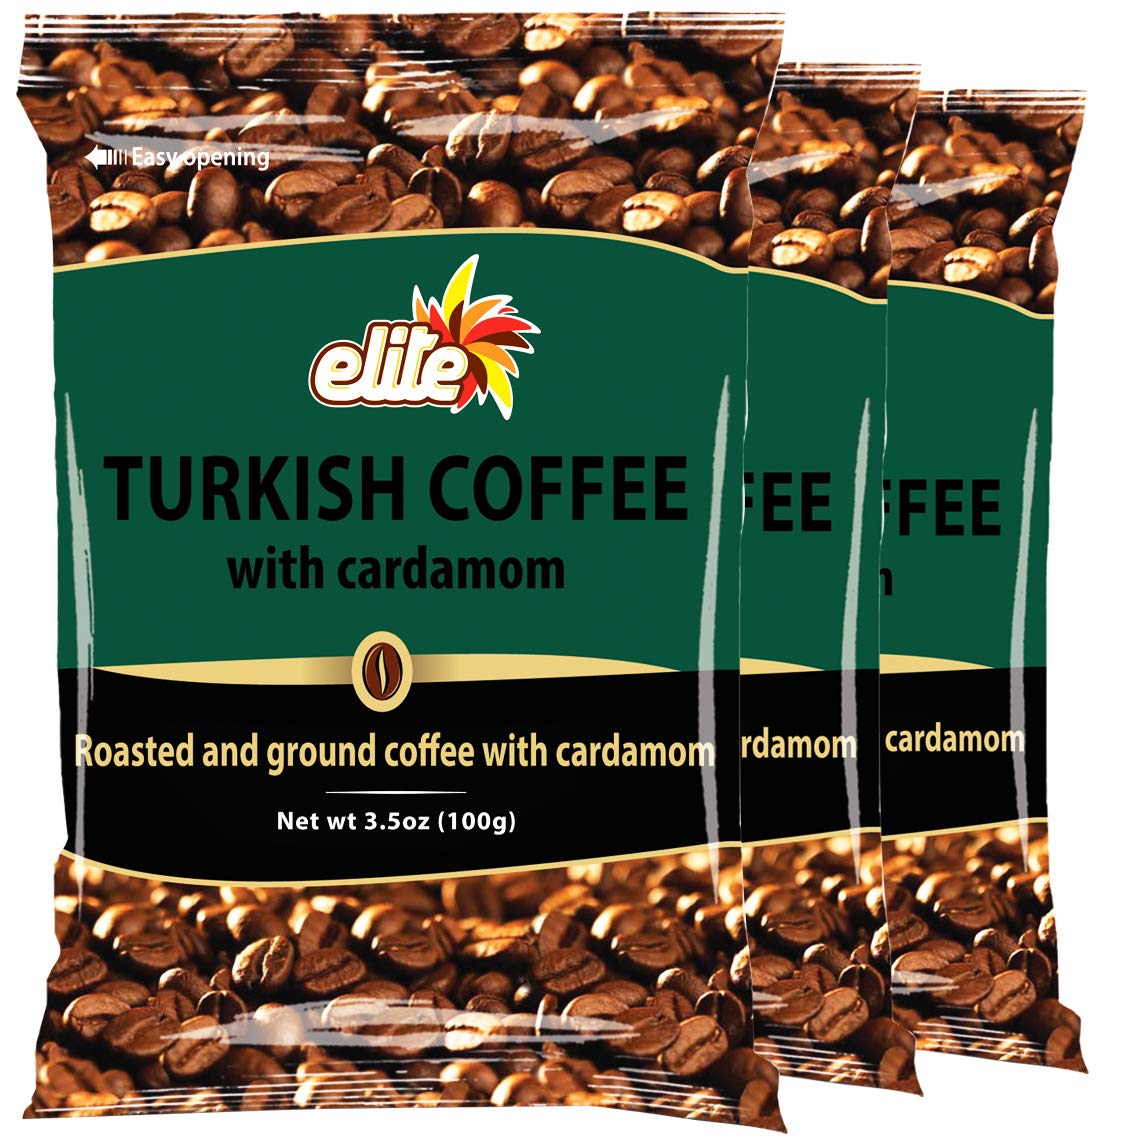 8. Elite Turkish Coffee with Cardamom 